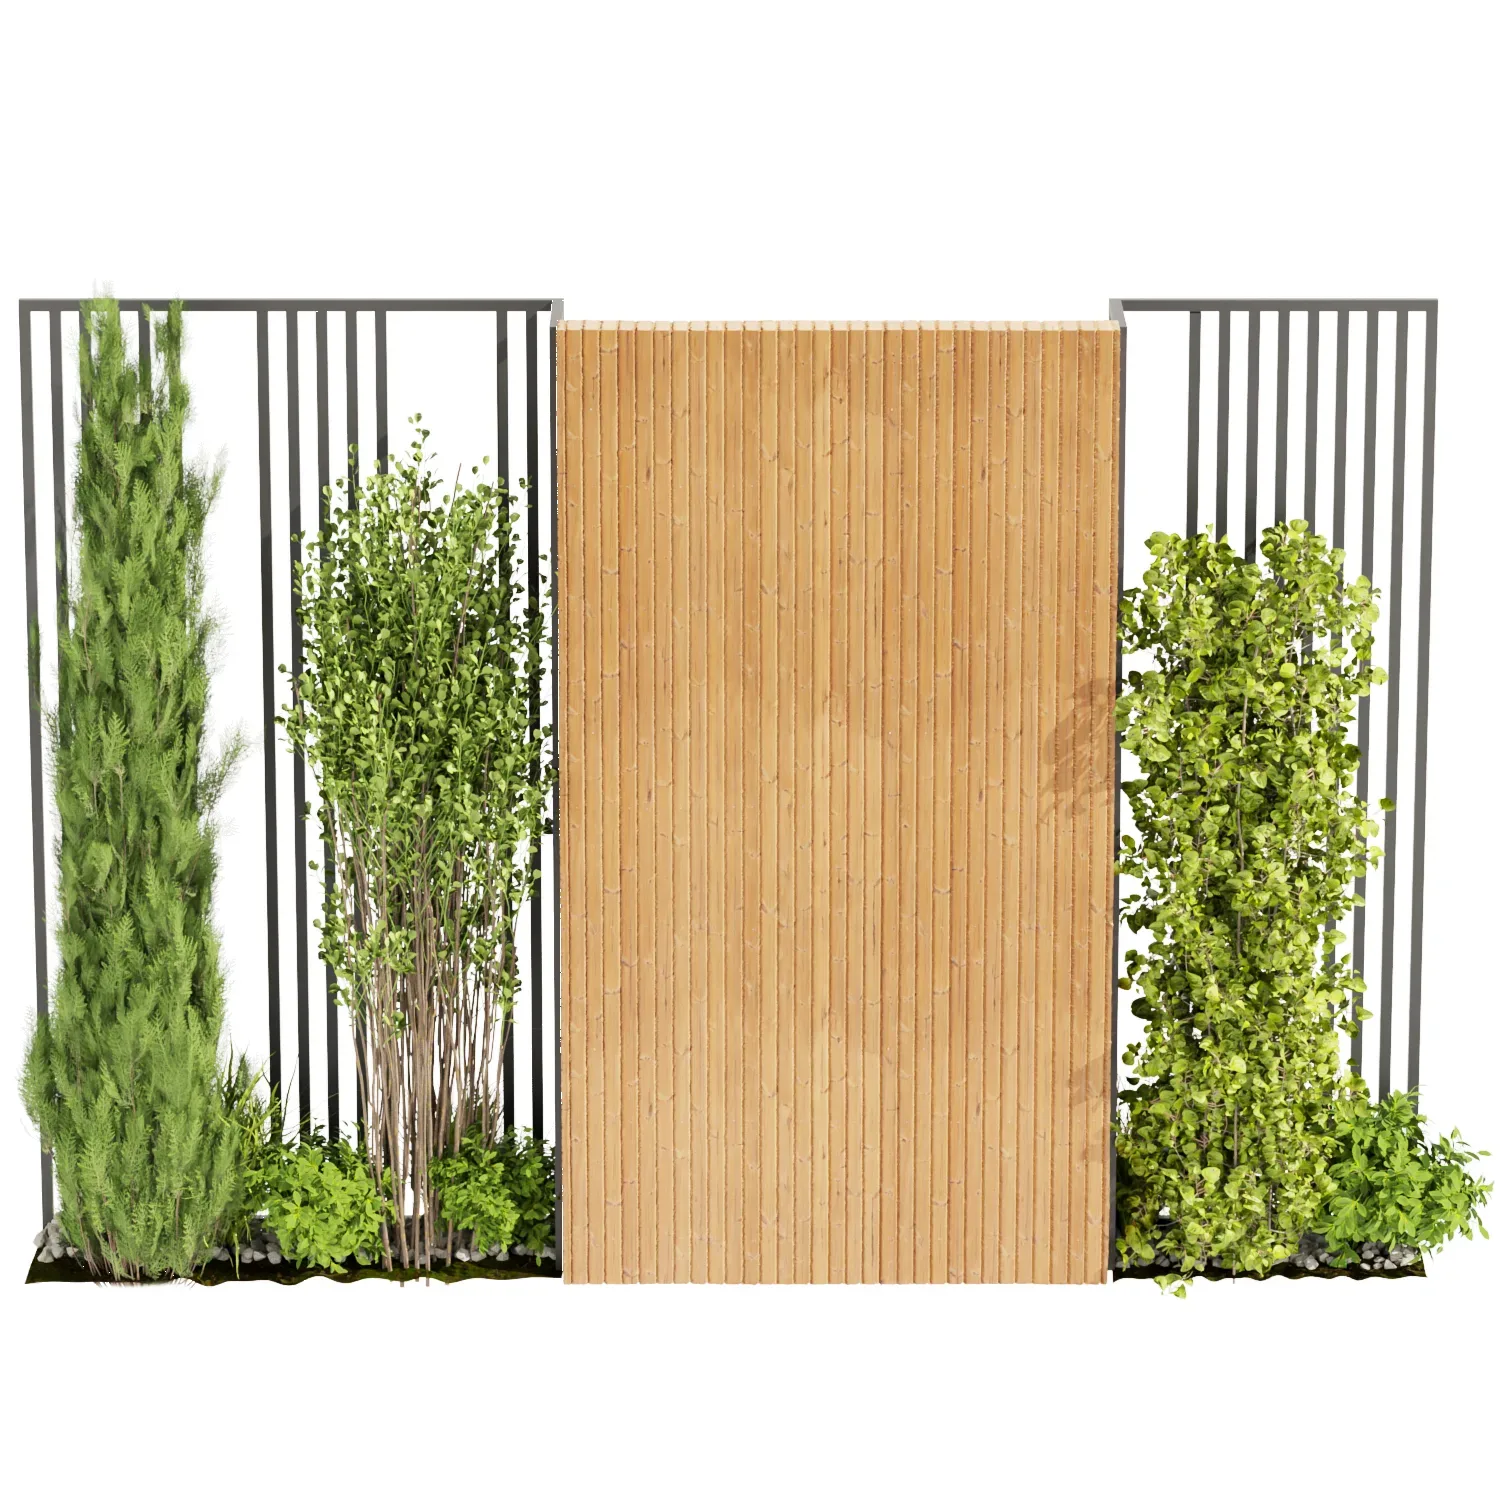 Collection plant vol 371 - Urban environment - wall yard - leaf - pine - blender - 3dmax - cinema 4d